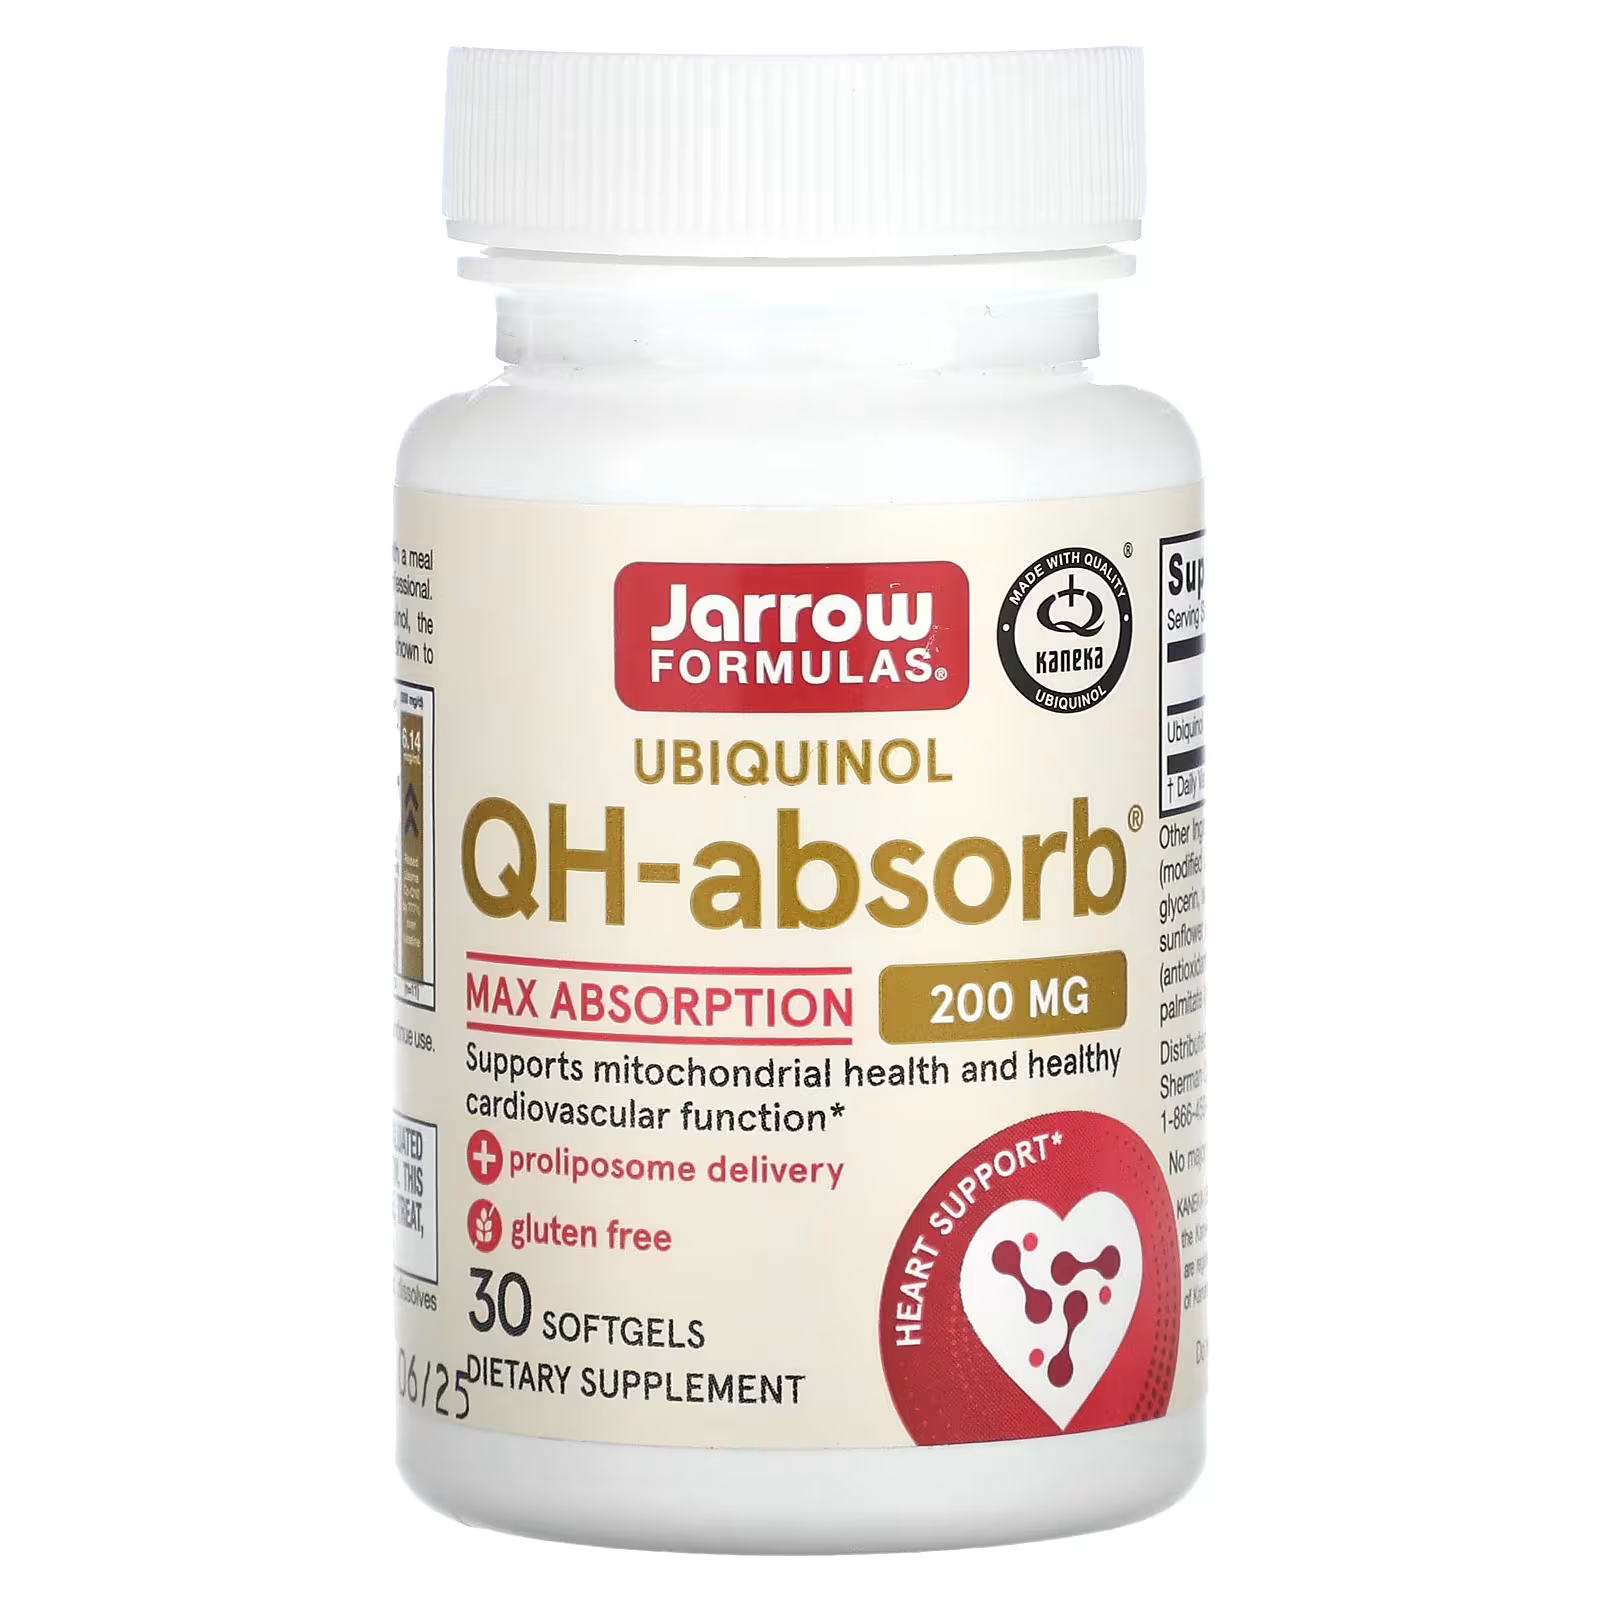 Jarrow Formulas Убихинол QH-Absorb Max Absorb 200 мг, 30 мягких таблеток qh absorb pqq 60 мягких таблеток jarrow formulas